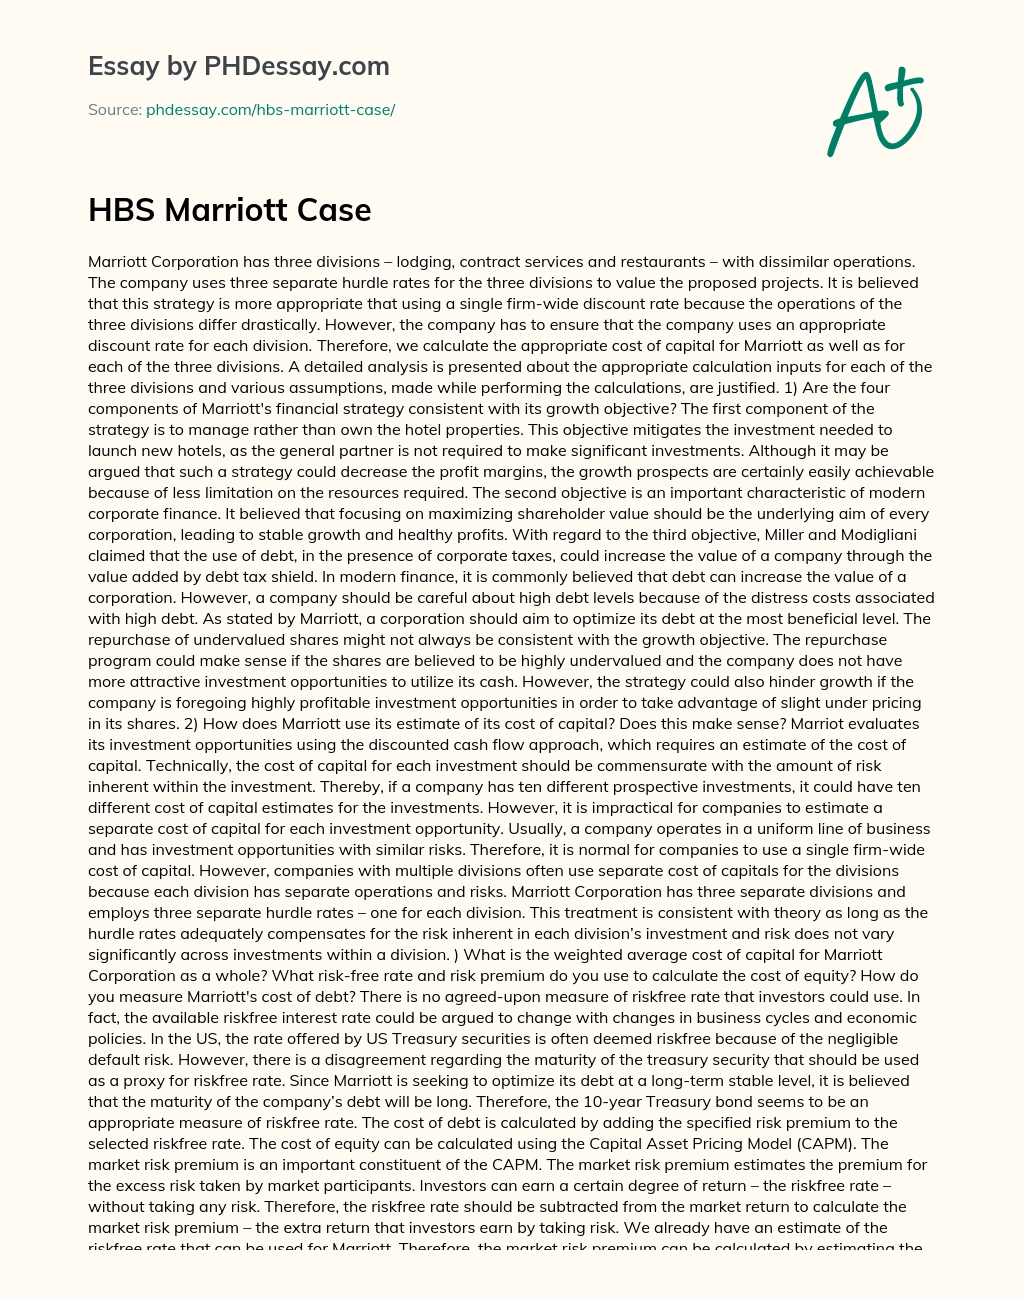 HBS Marriott Case essay